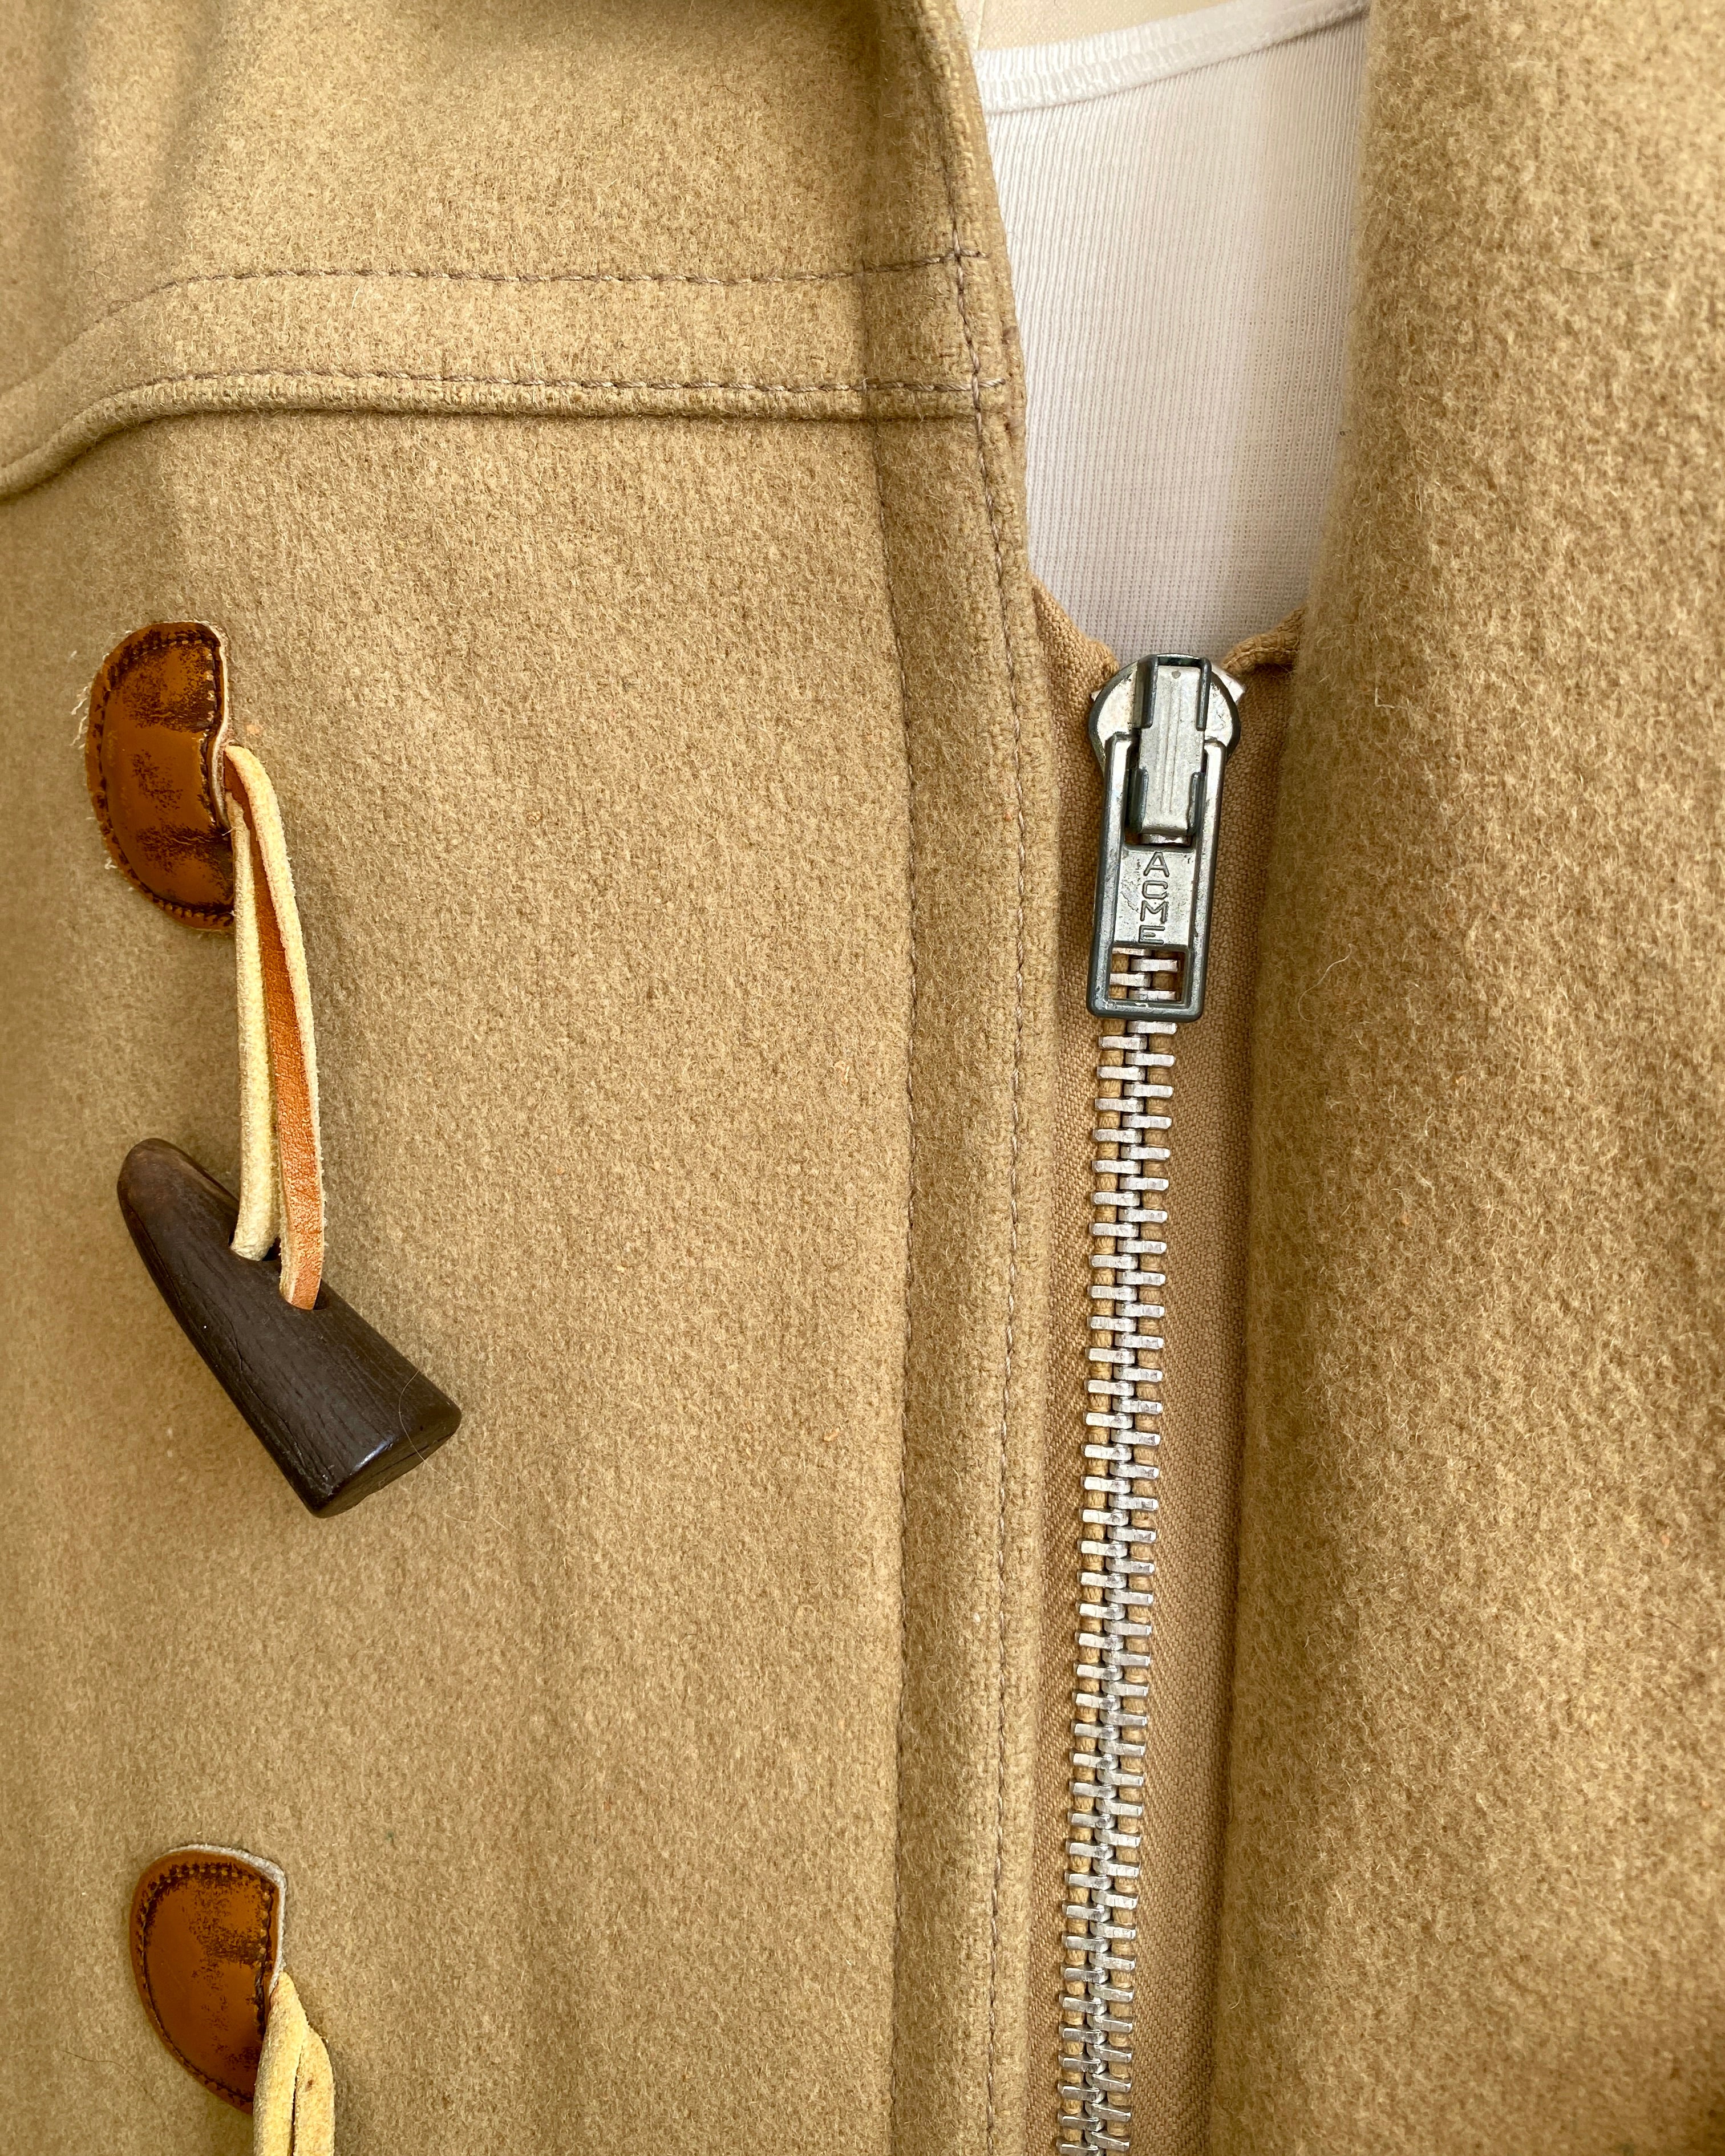 Vintage 1970s CROYDON Wool Tan Beige Duffle Coat With Toggles and Detachable Hood M